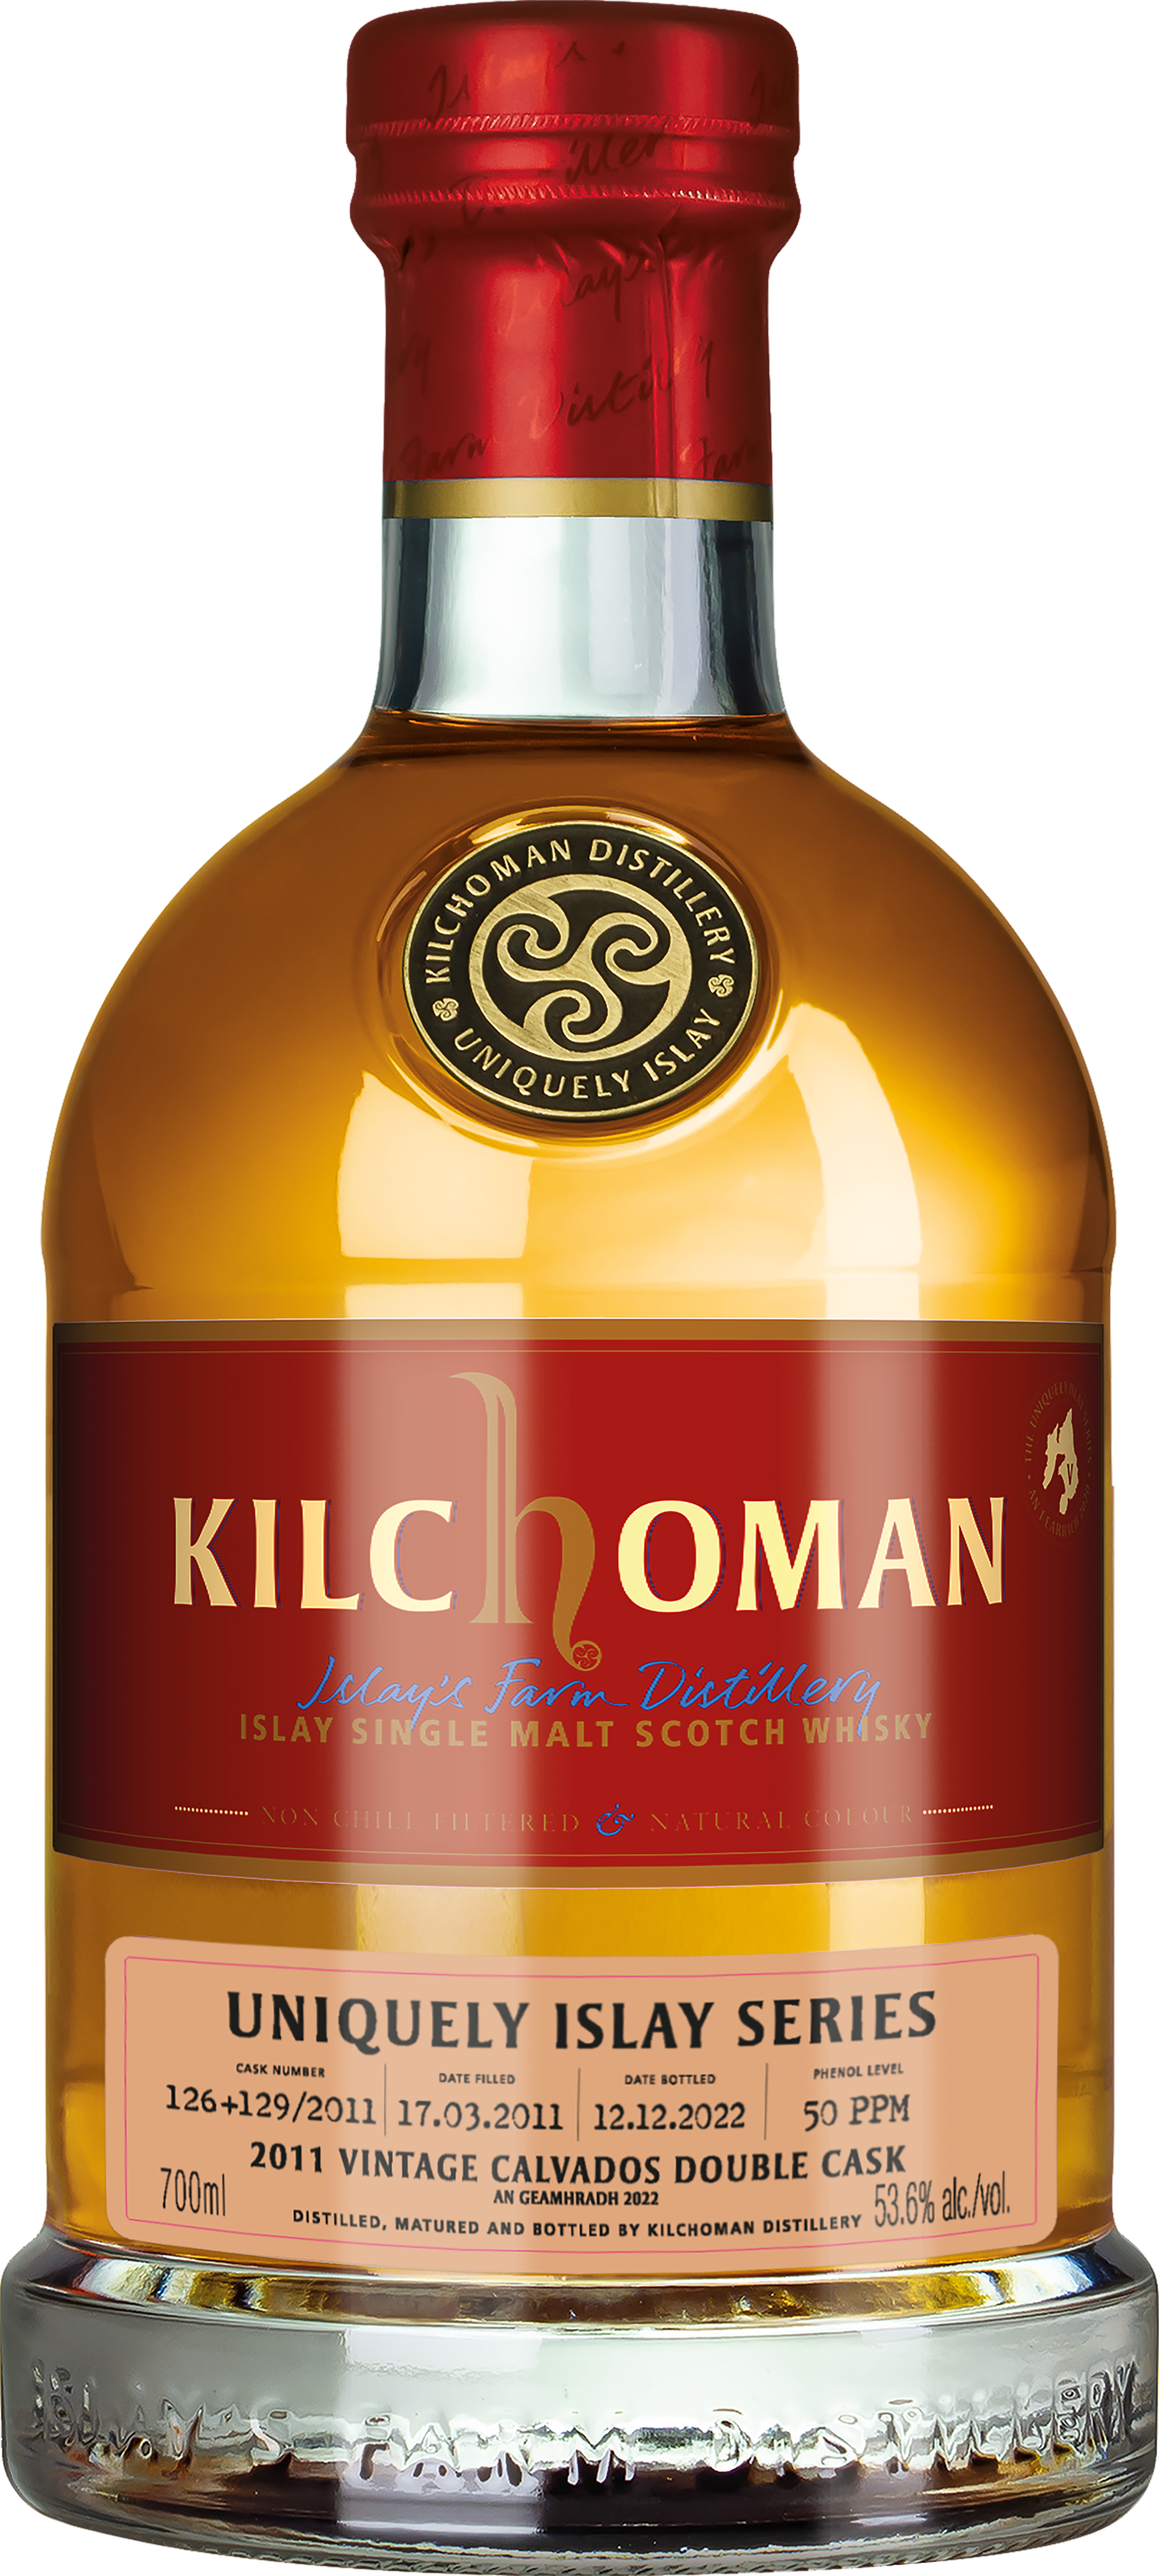 From Barley to bottle: Kilchoman Whisky